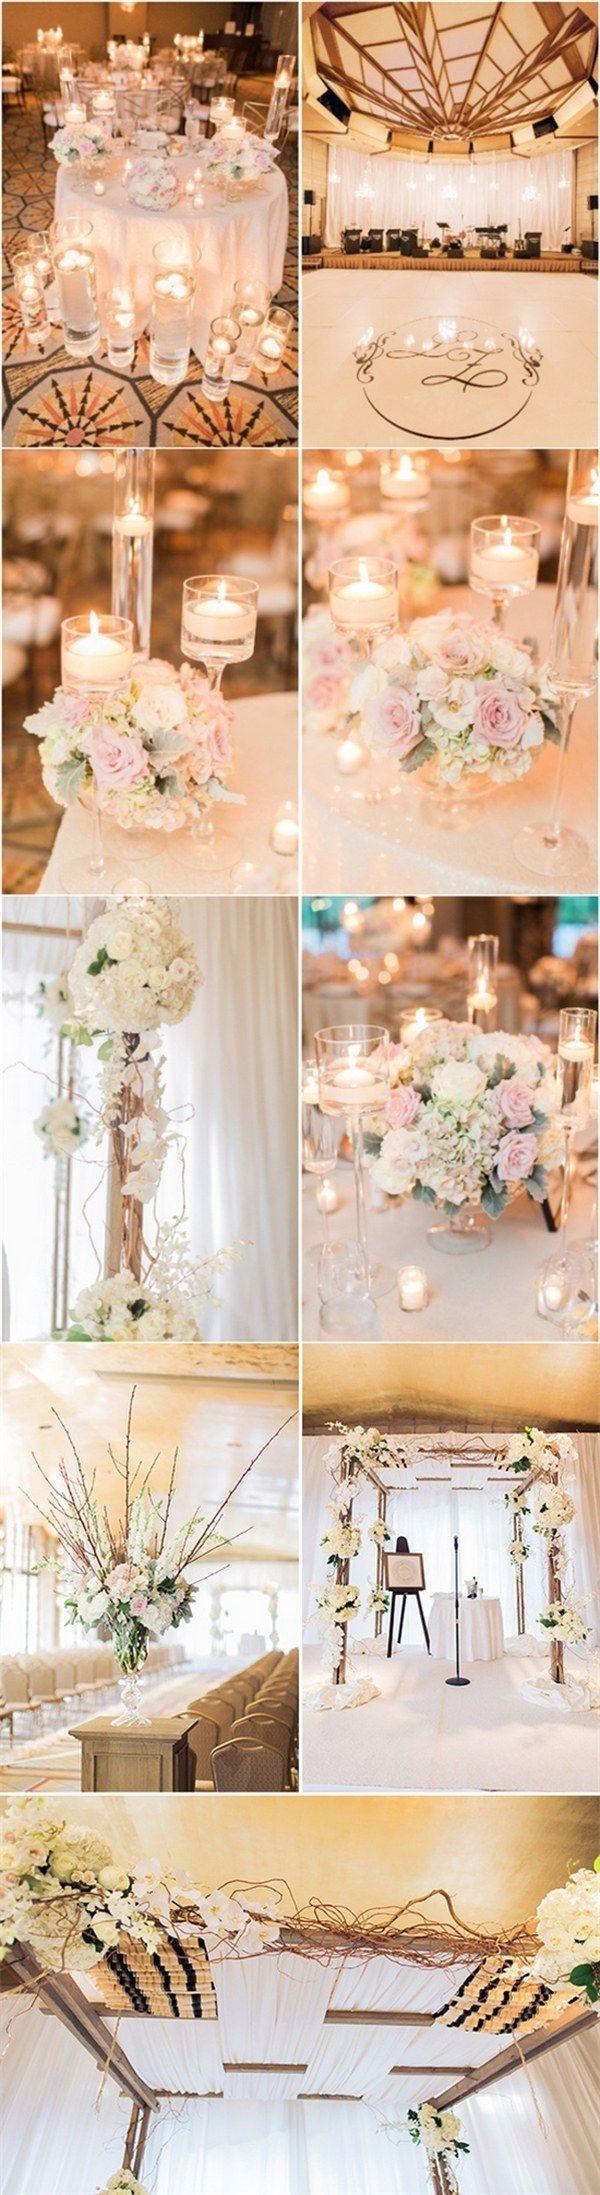 Wedding - Top 5 Romantic Fairytale Wedding Theme Ideas